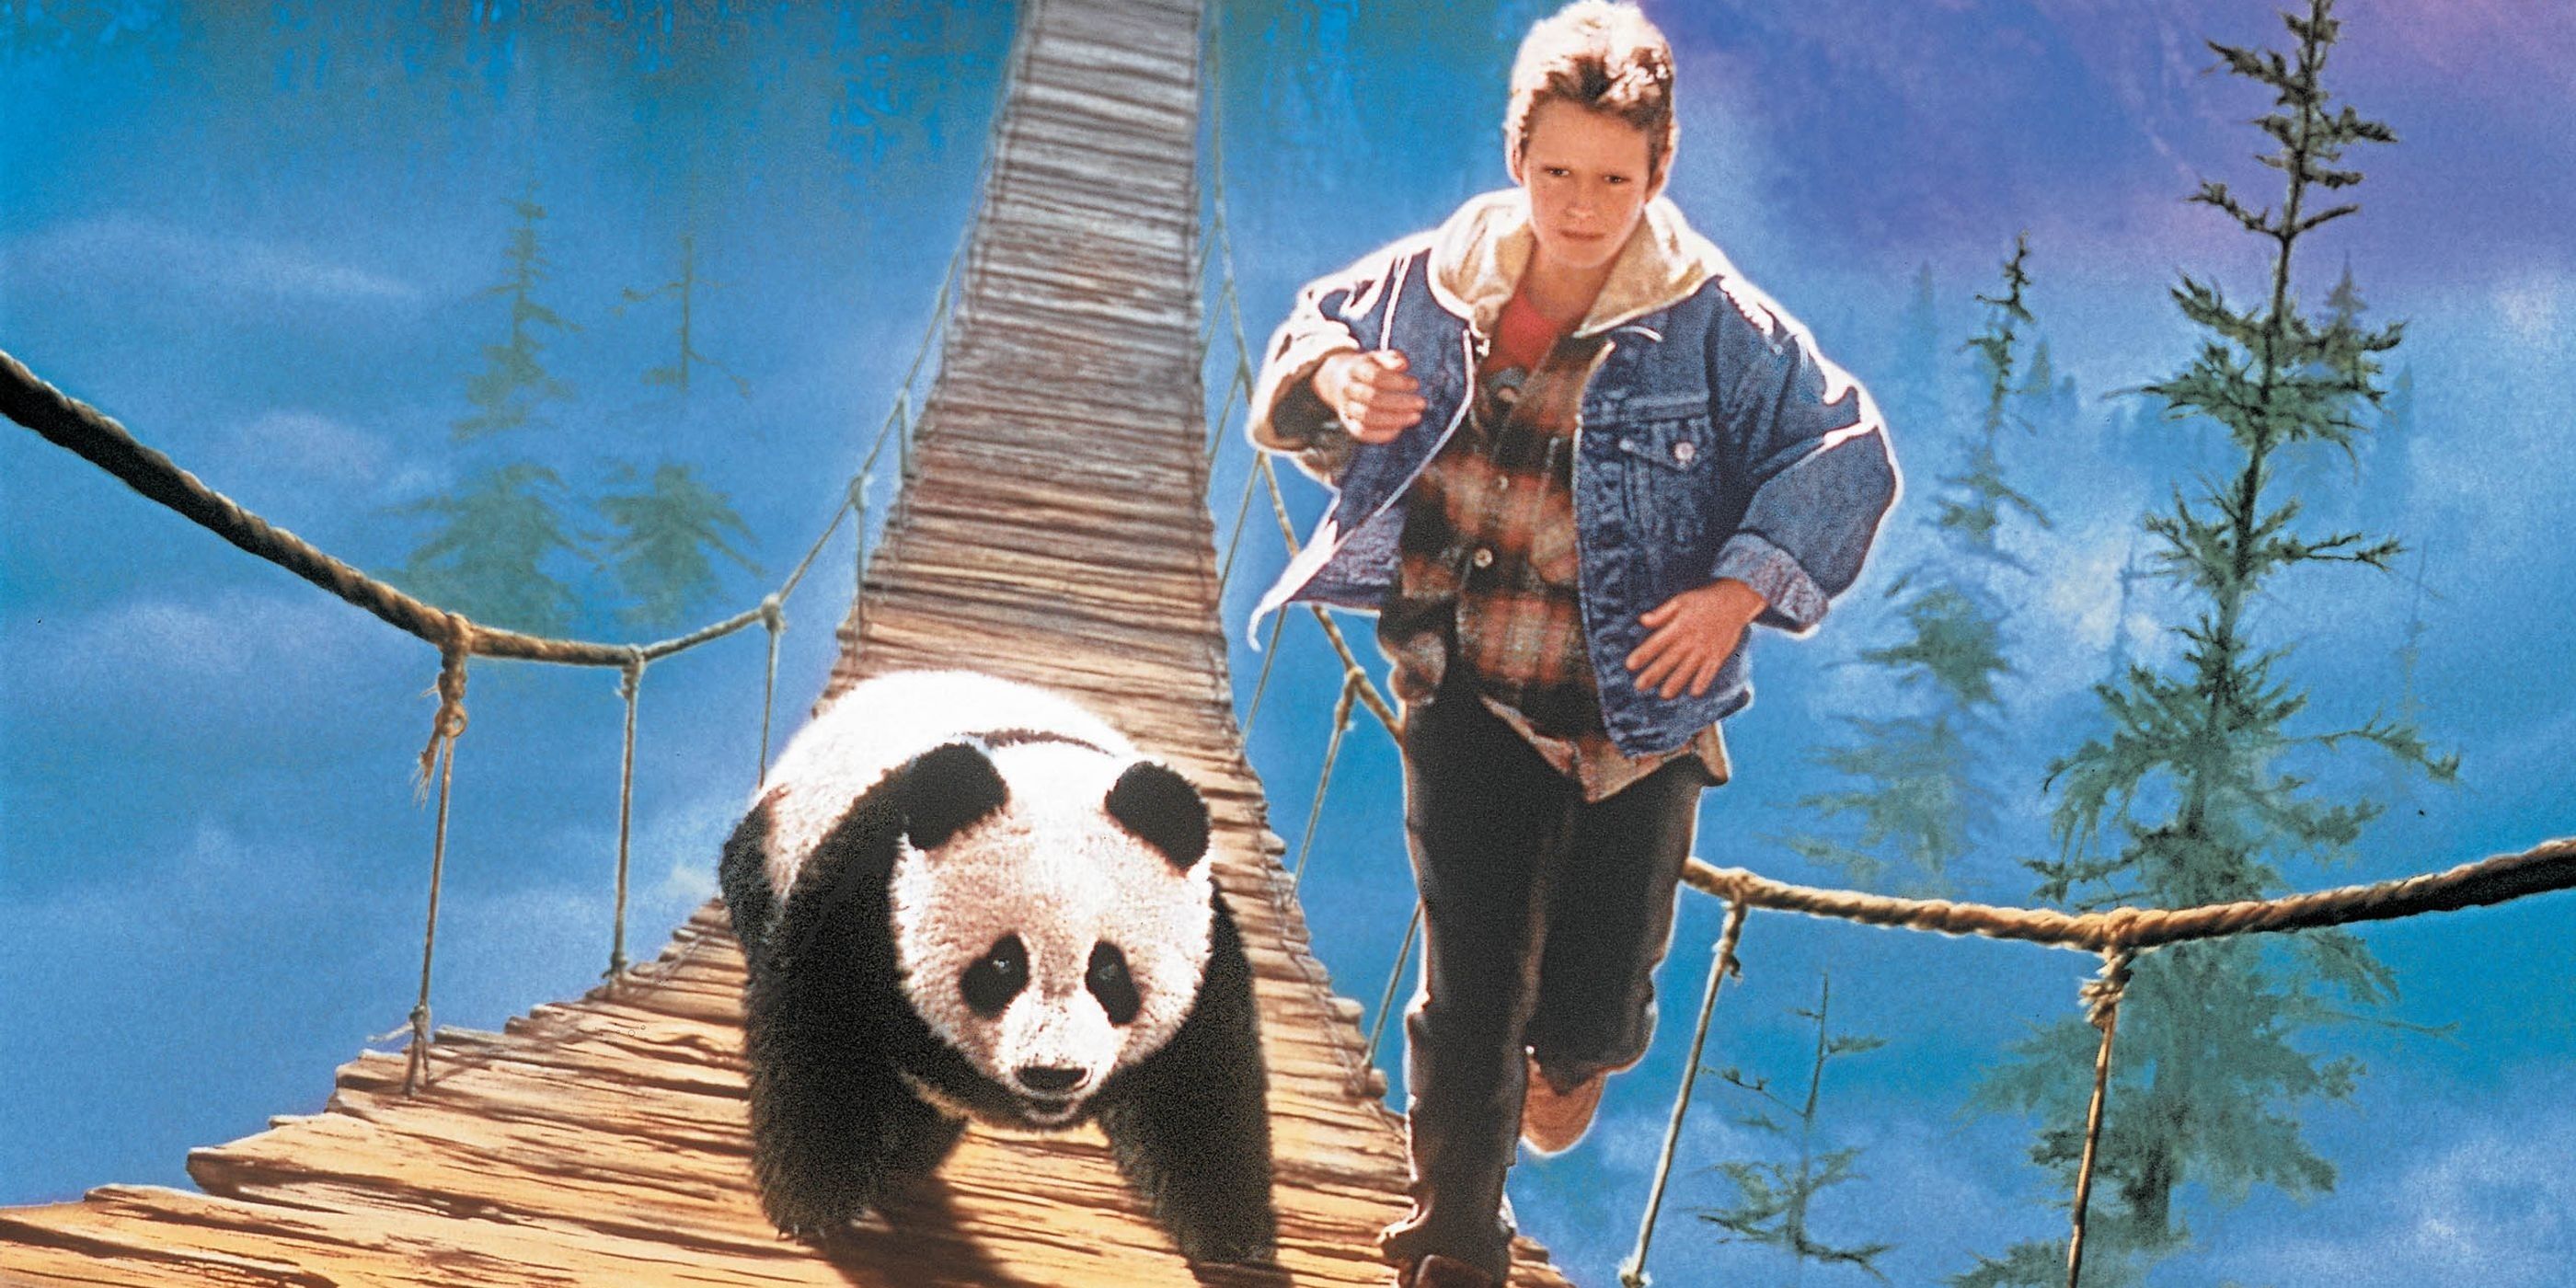 Boy running with panda along wooden bridge in The Amazing Panda Adventure